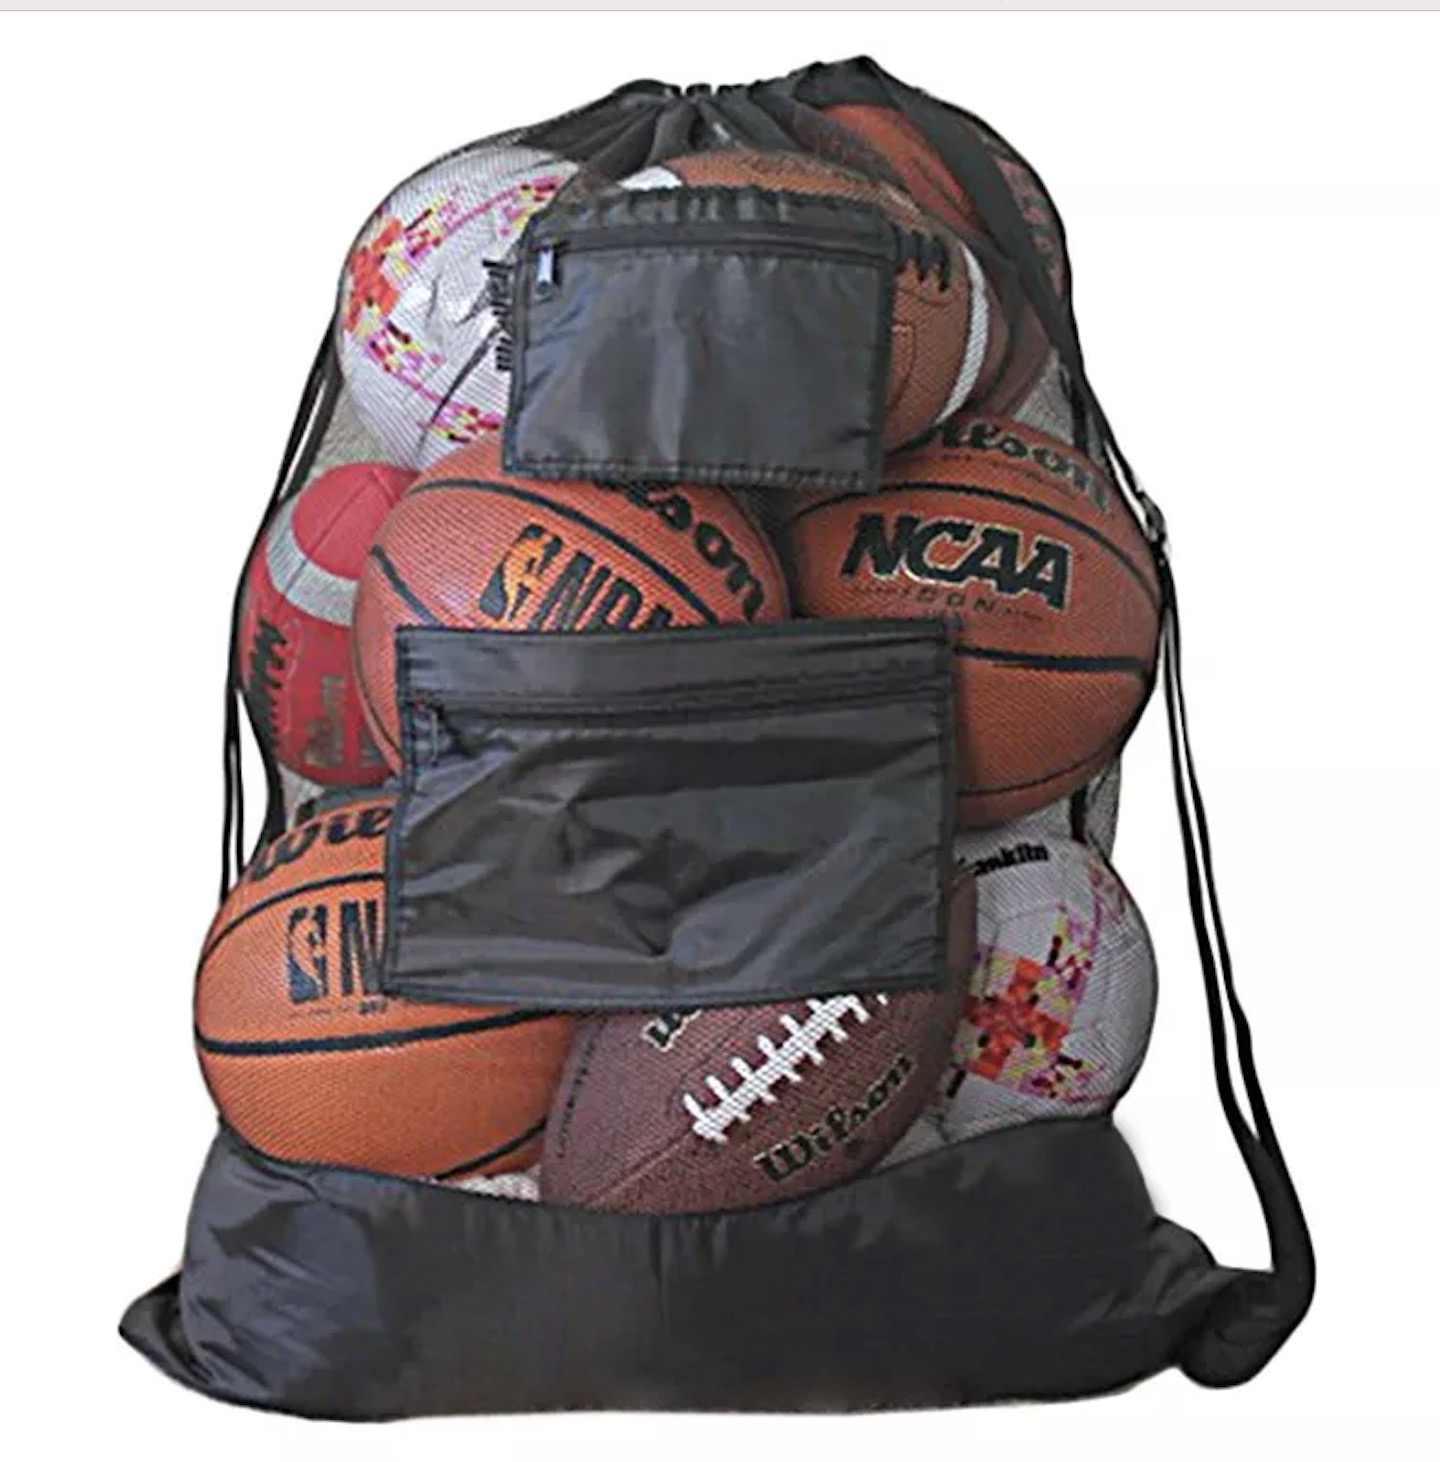 Amazon Hot Sale Drawstring Basketball Bag Extra Large Soccer Ball Bag with Adjustable Shoulder Strap Gear Bag for Football